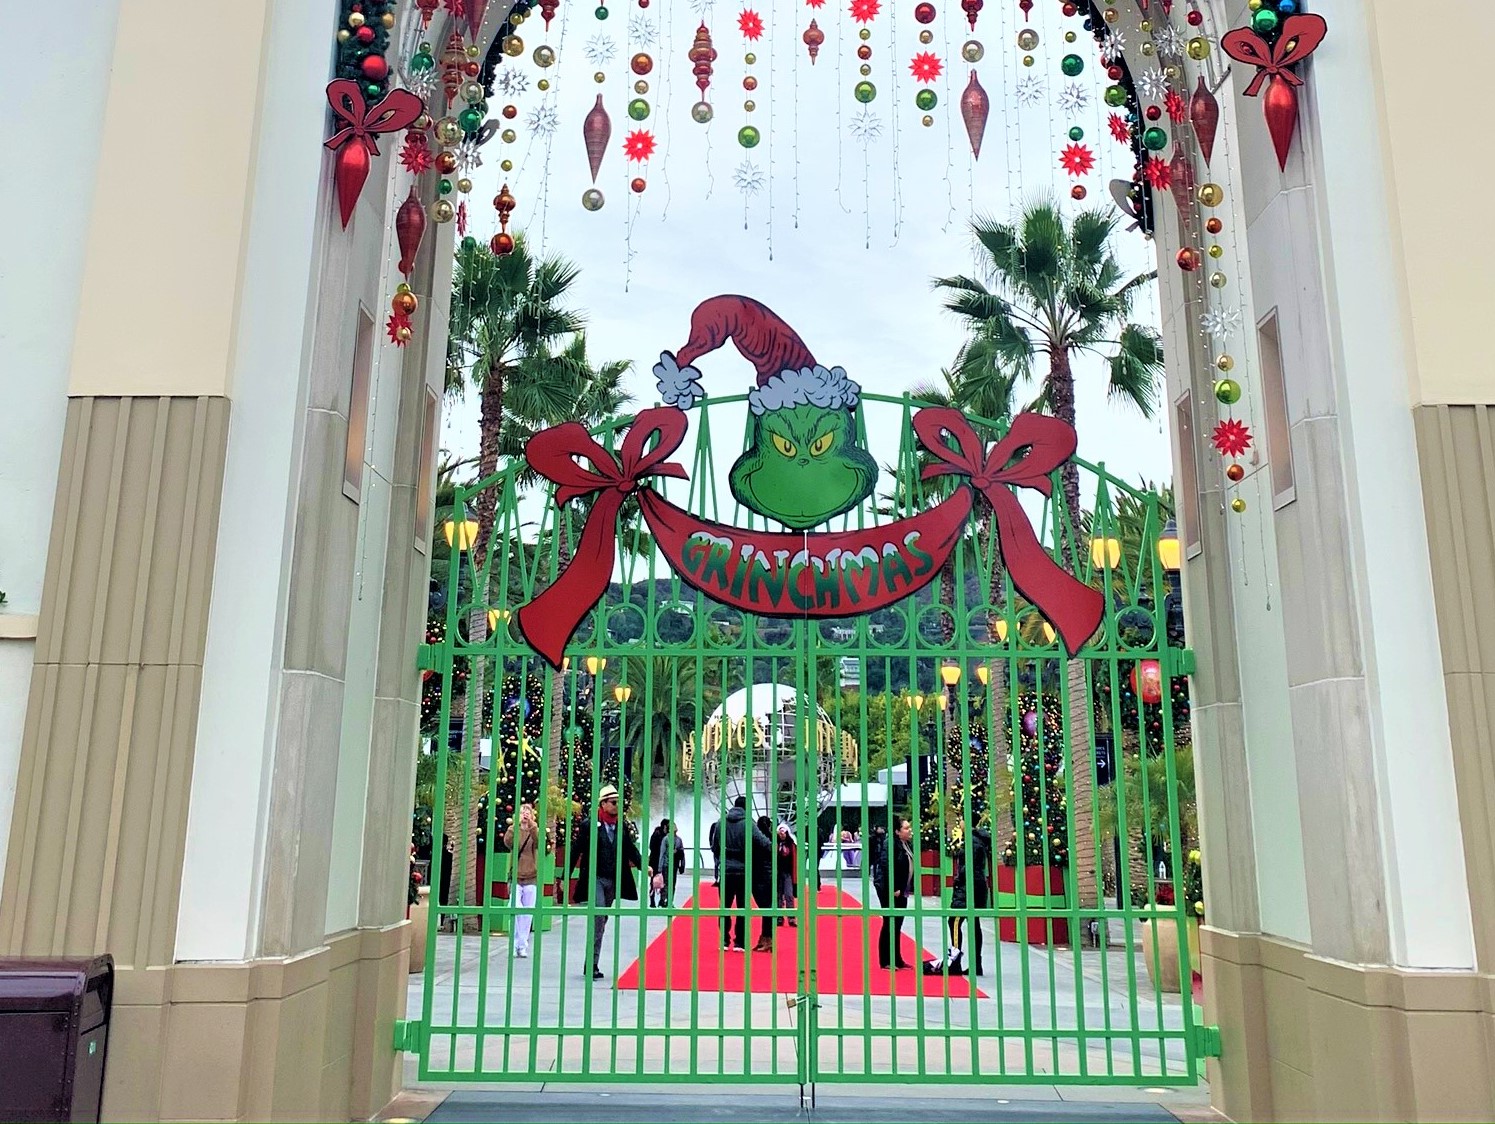 Event Recap: Holidays at Universal Studios Hollywood